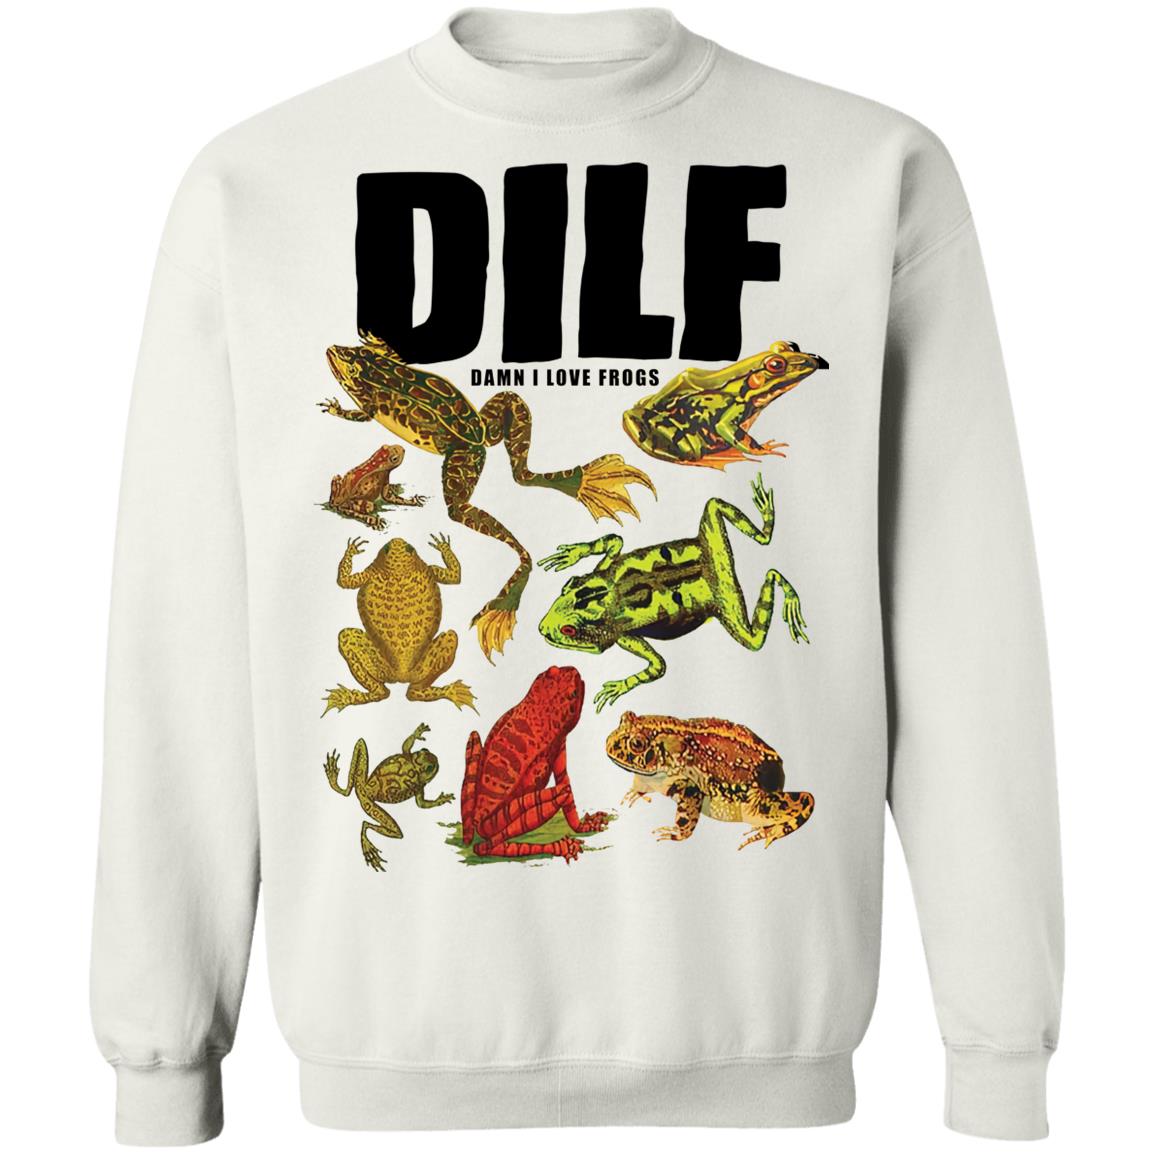 Dilf Damn I Love Frogs Shirt 2